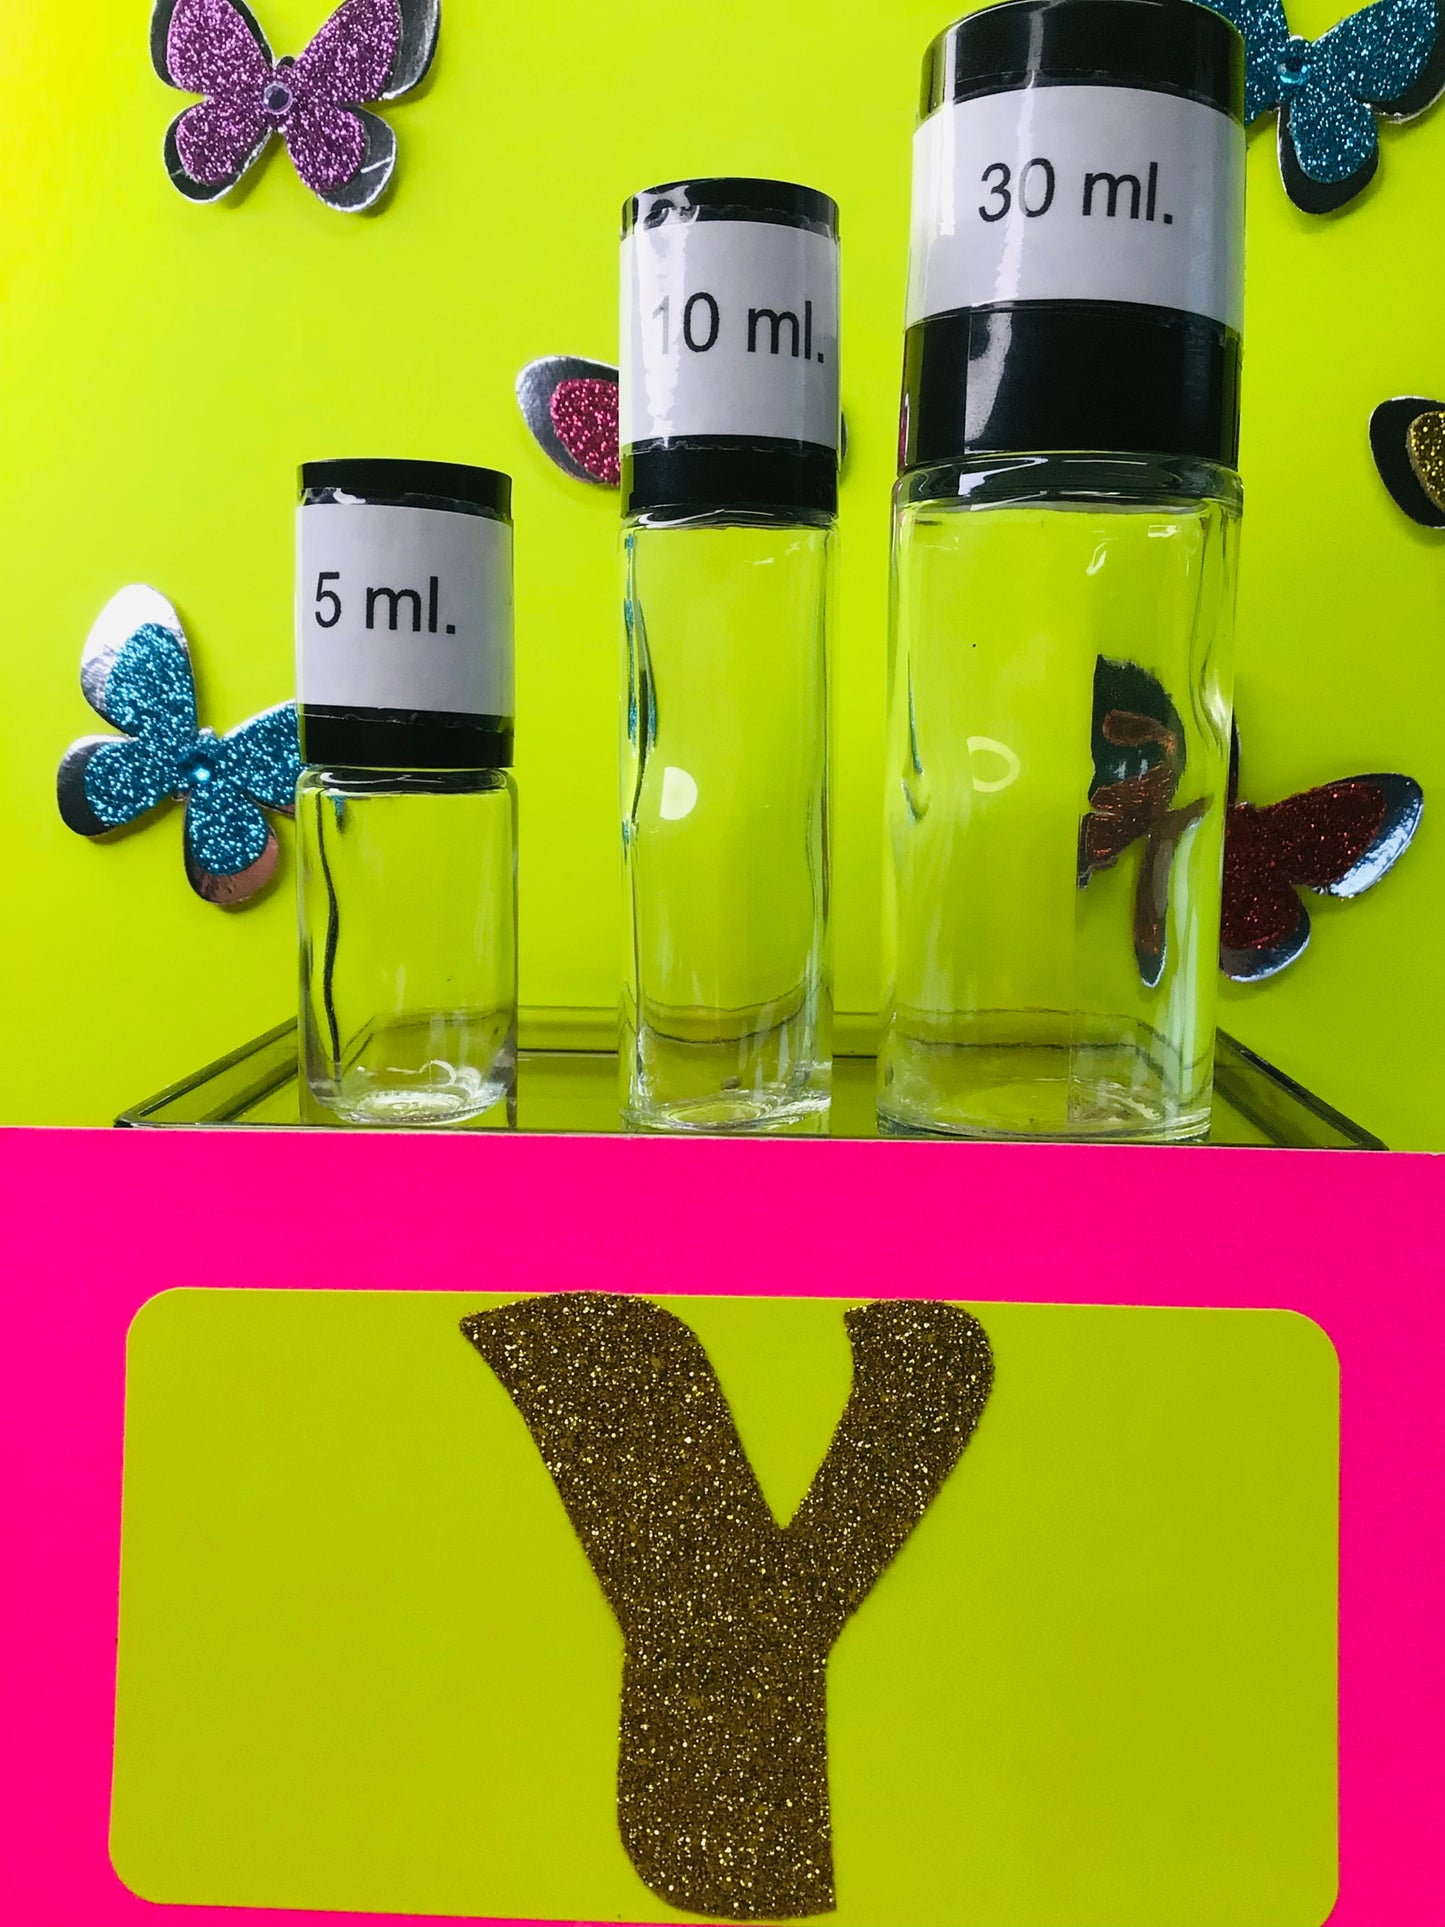 Perfume Oils, "W & Y", Handmade, High Quality Fragrance Oils, Premium Body Oils, Long Lasting